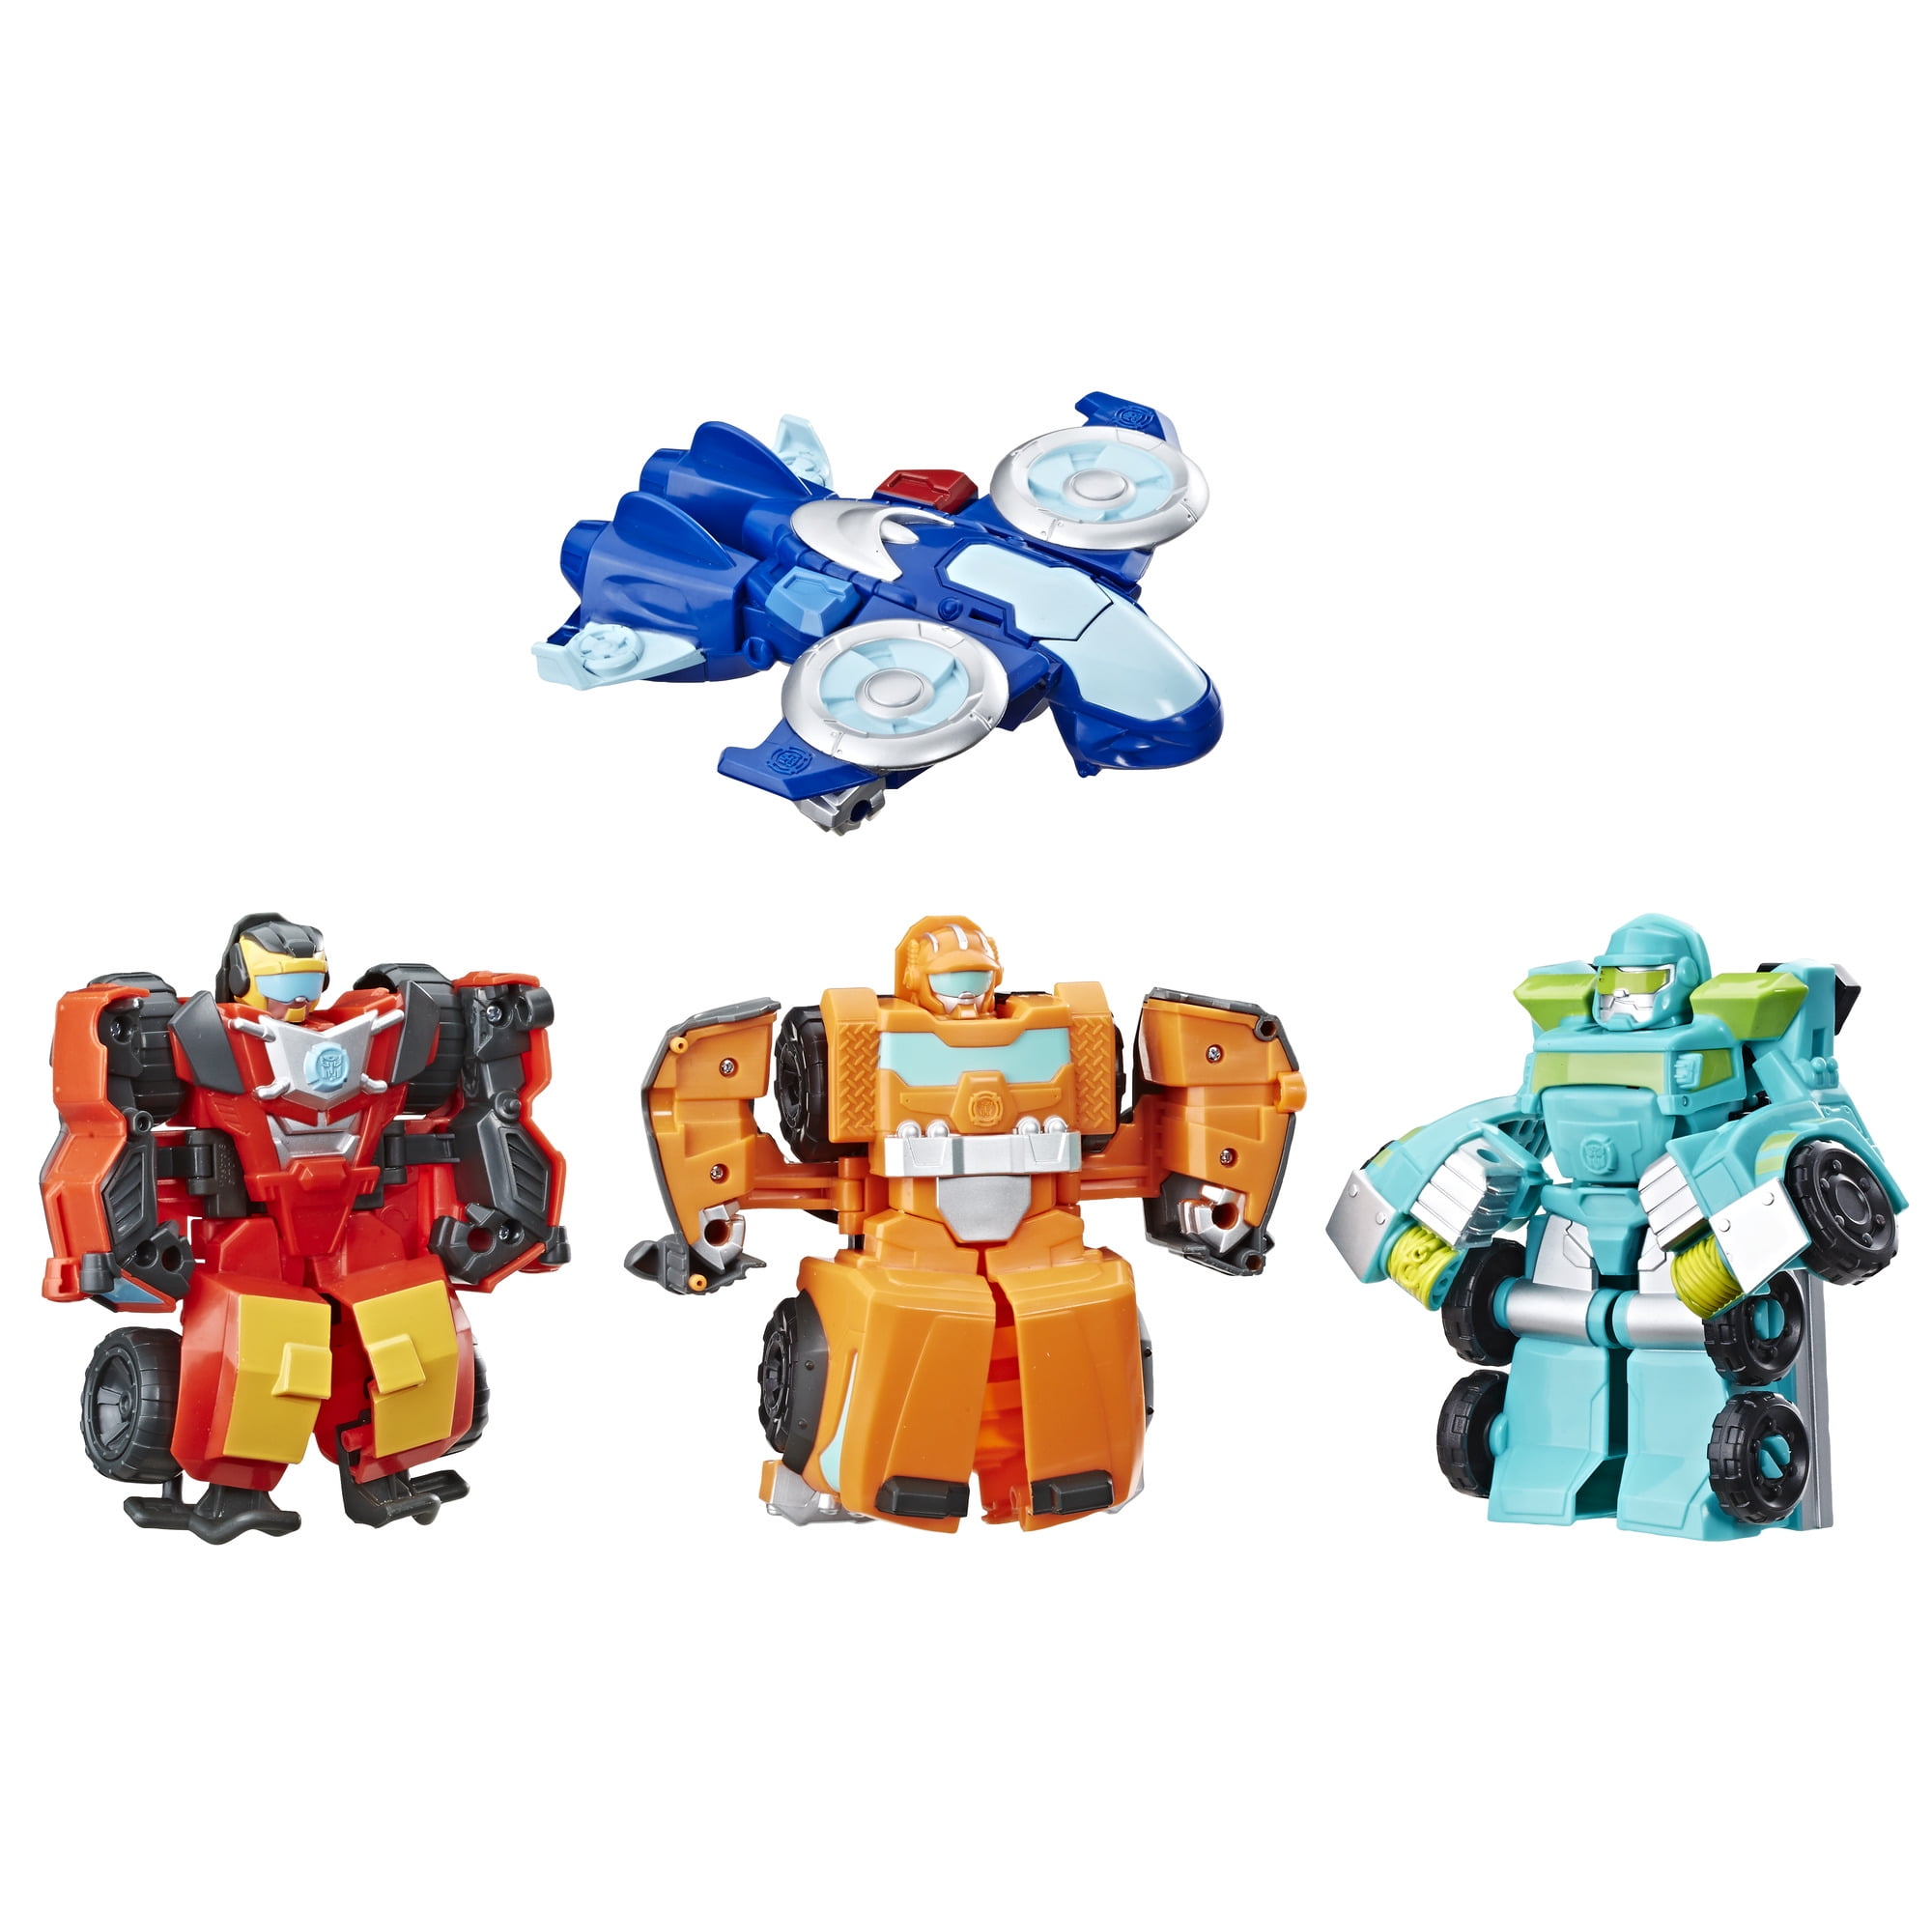 Transformers Playskool Heroes Rescue Bots Loose NEW SINGLE FIGURE Choisir 